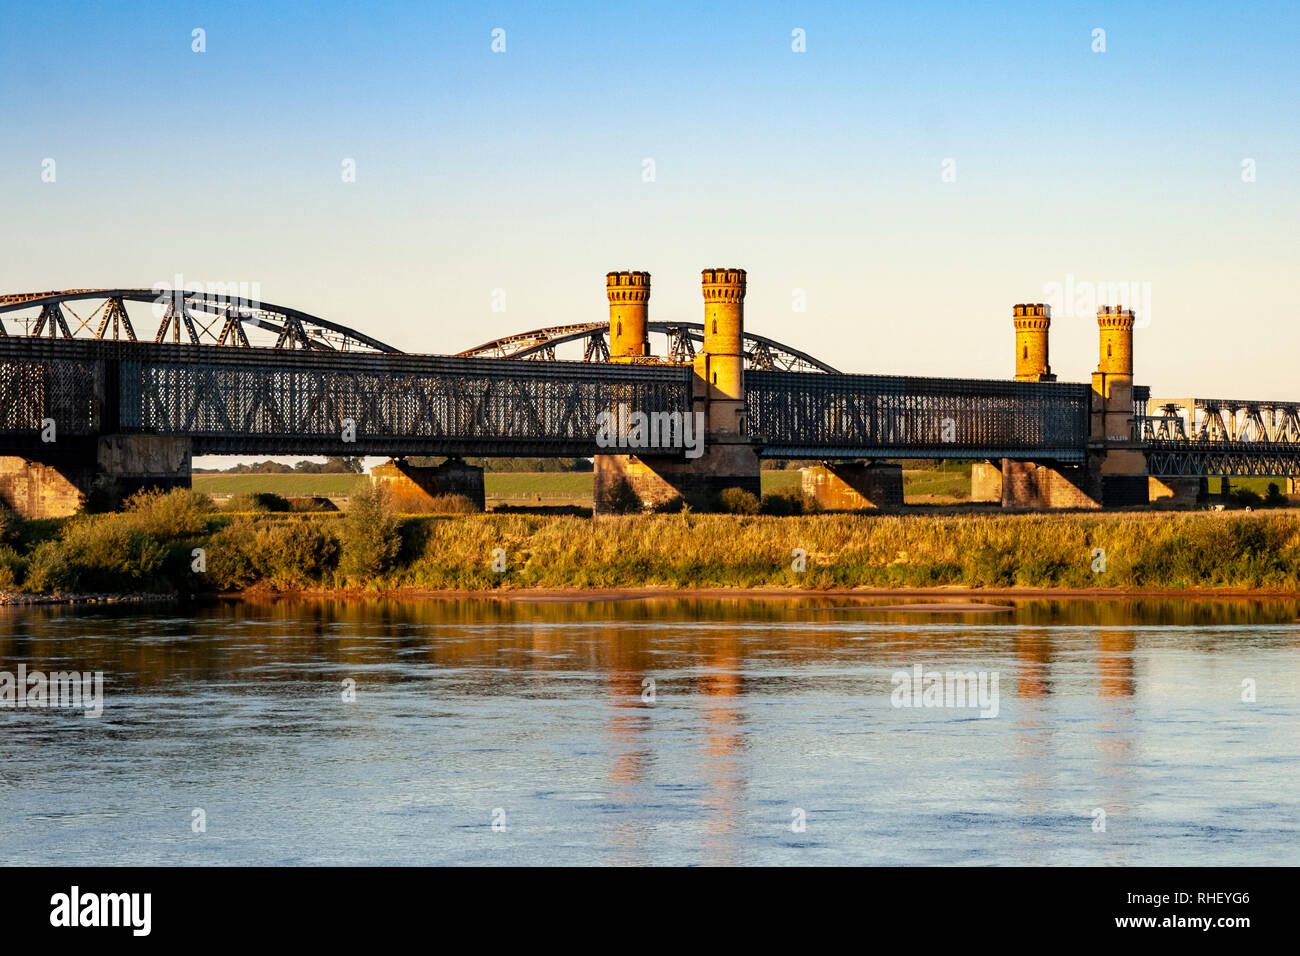 Tczew, a historic railway bridge from 1850, over the Vistula River, Poland, Europe Stock Photo